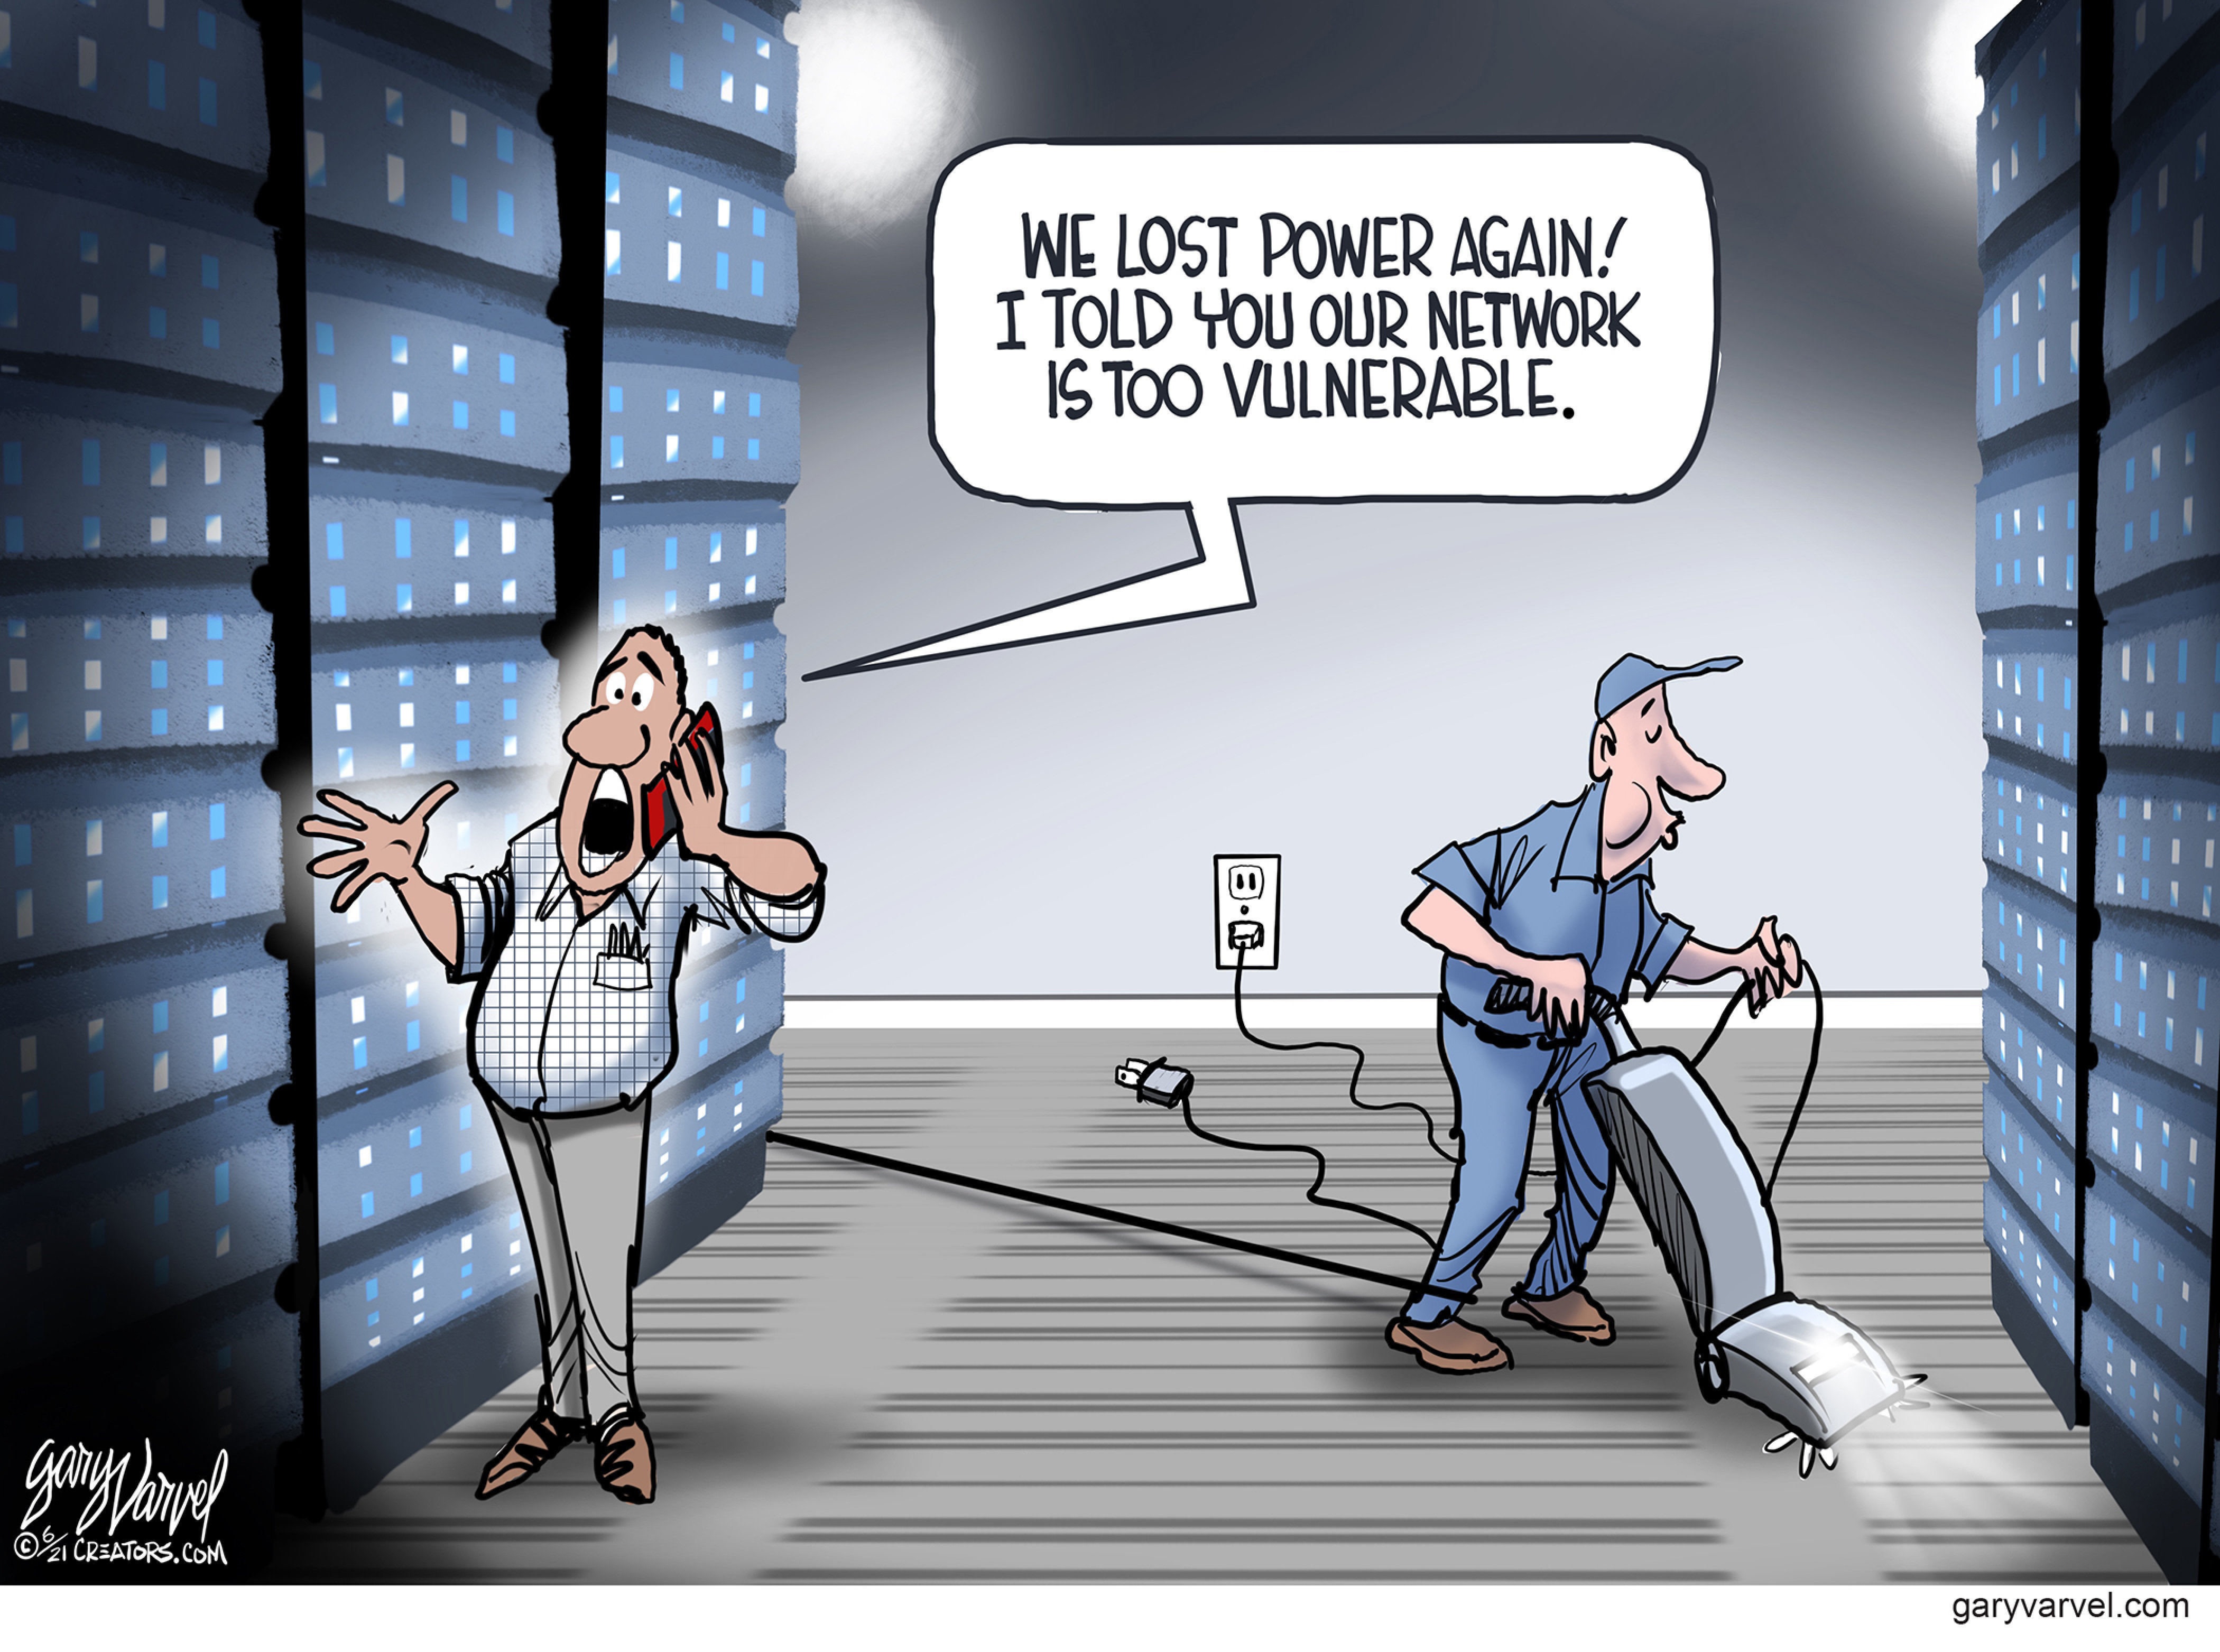 A delicate network